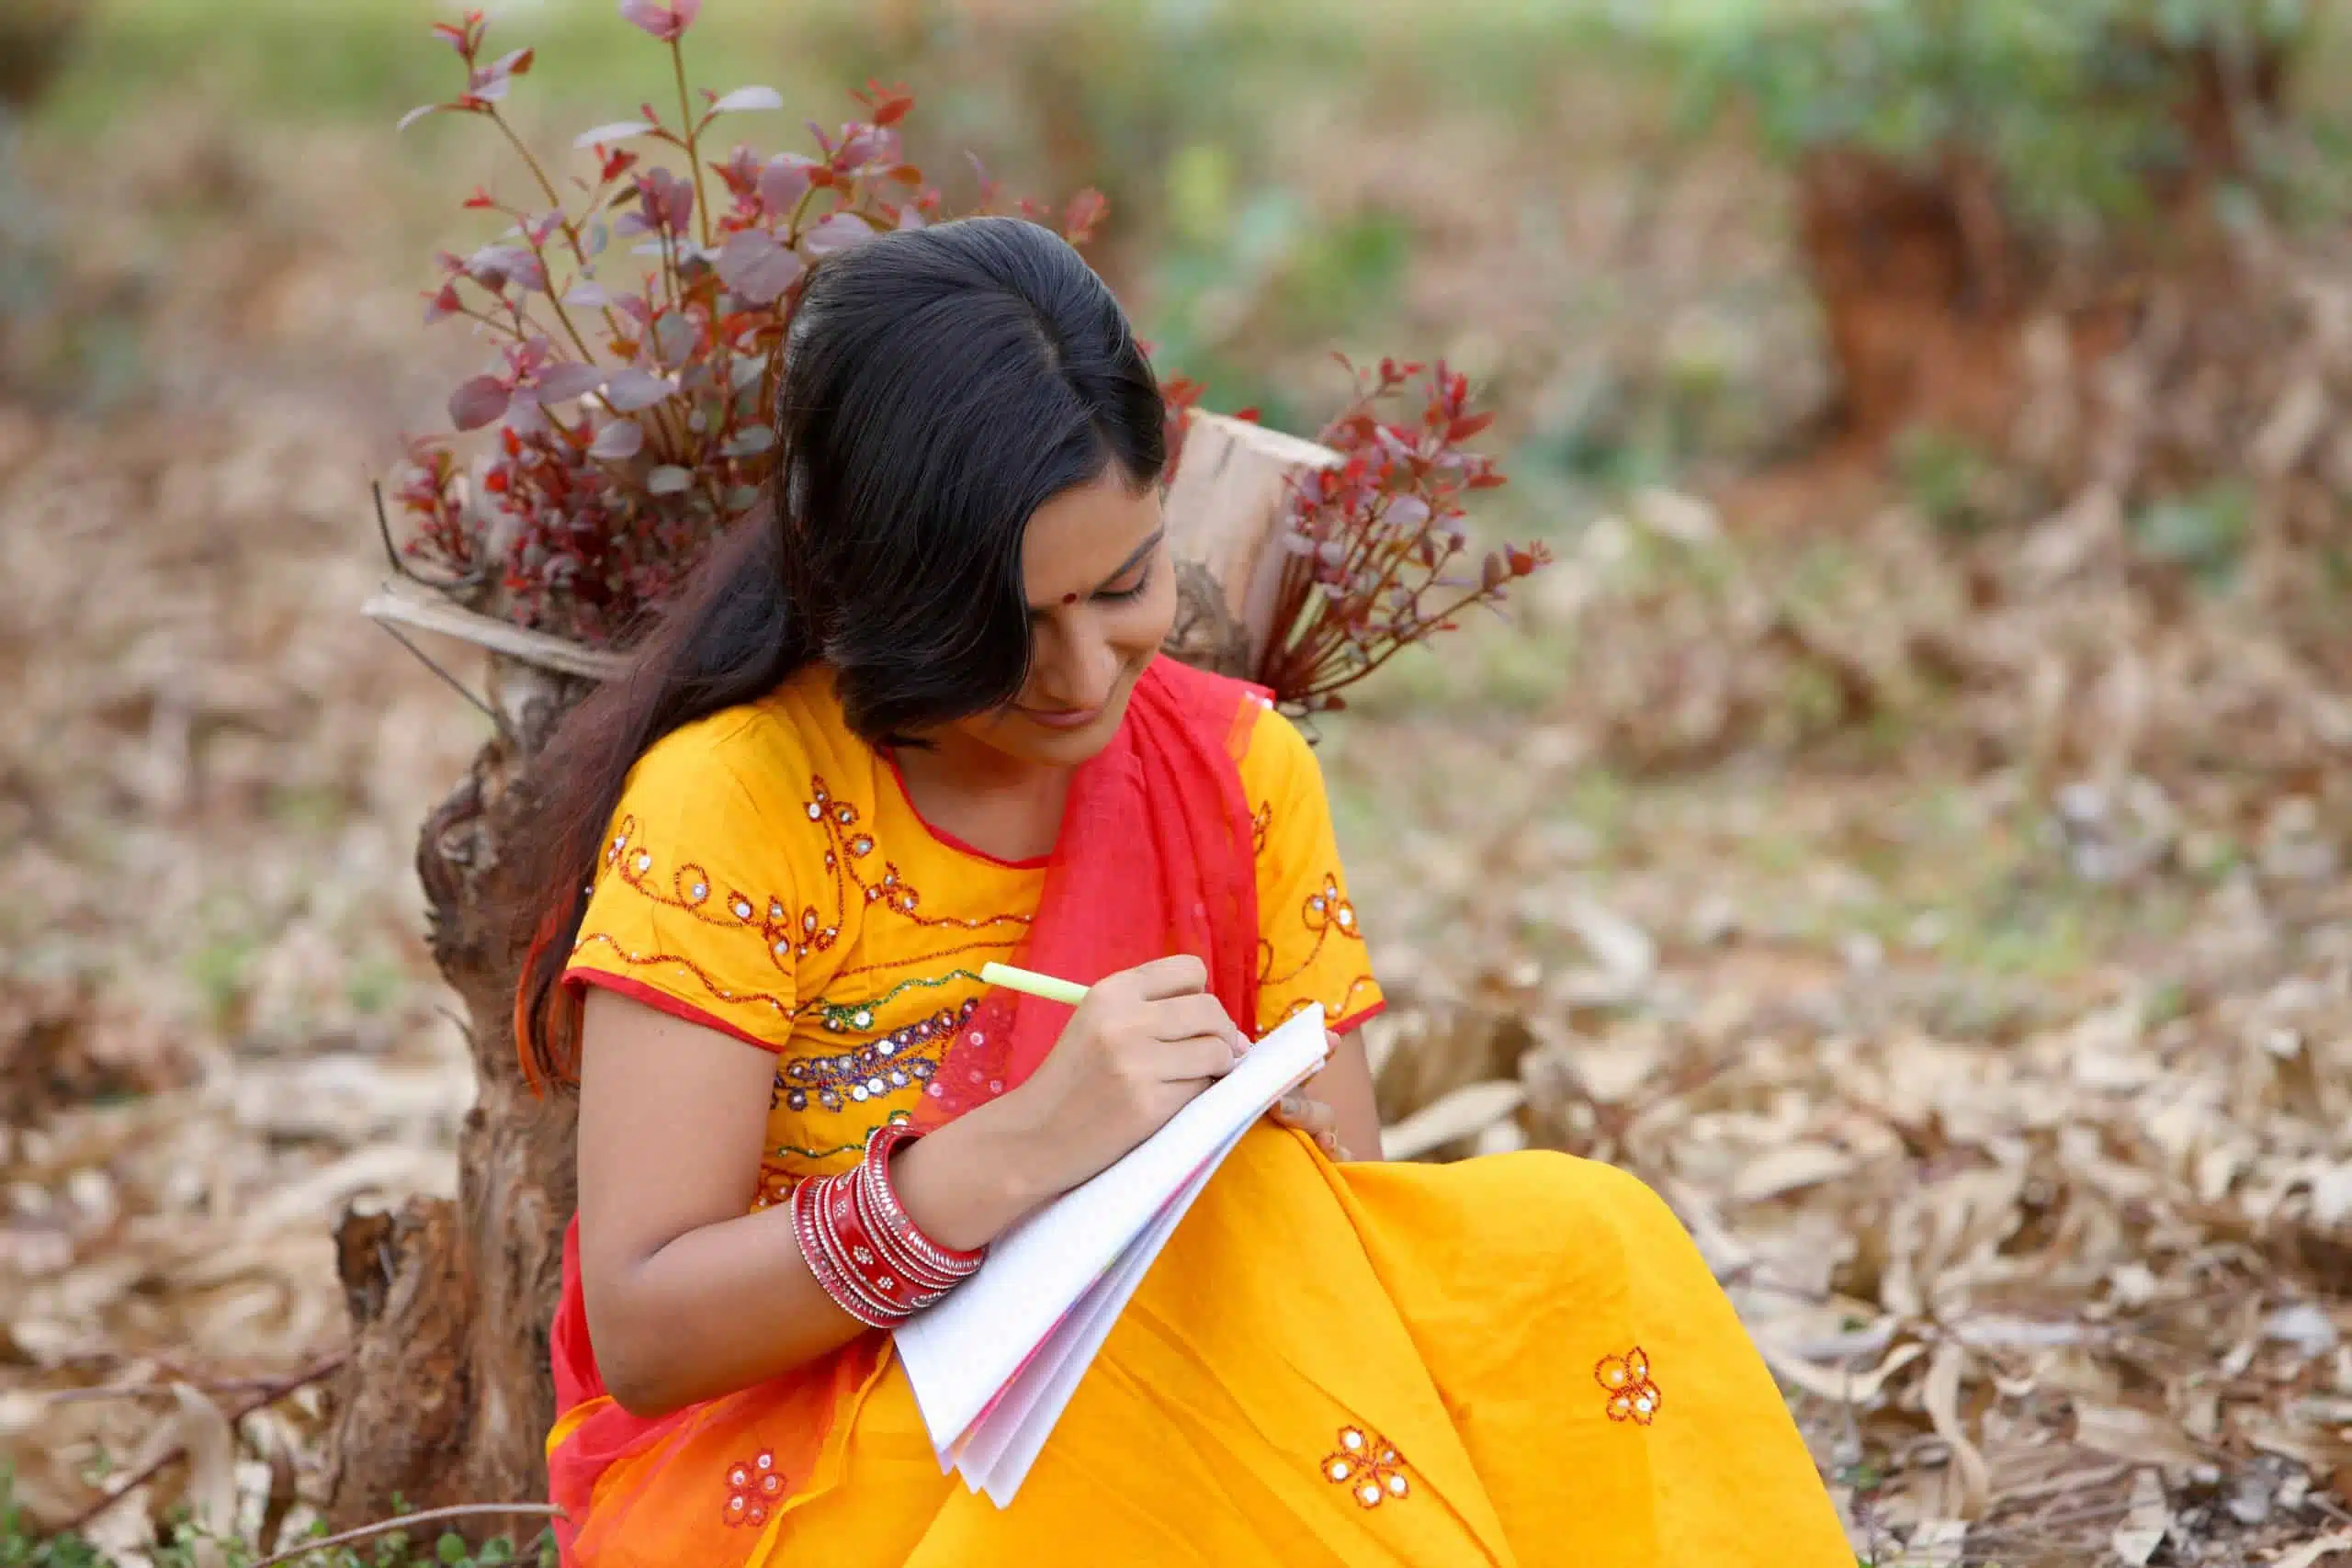 Indian woman in Sari writing outdoor